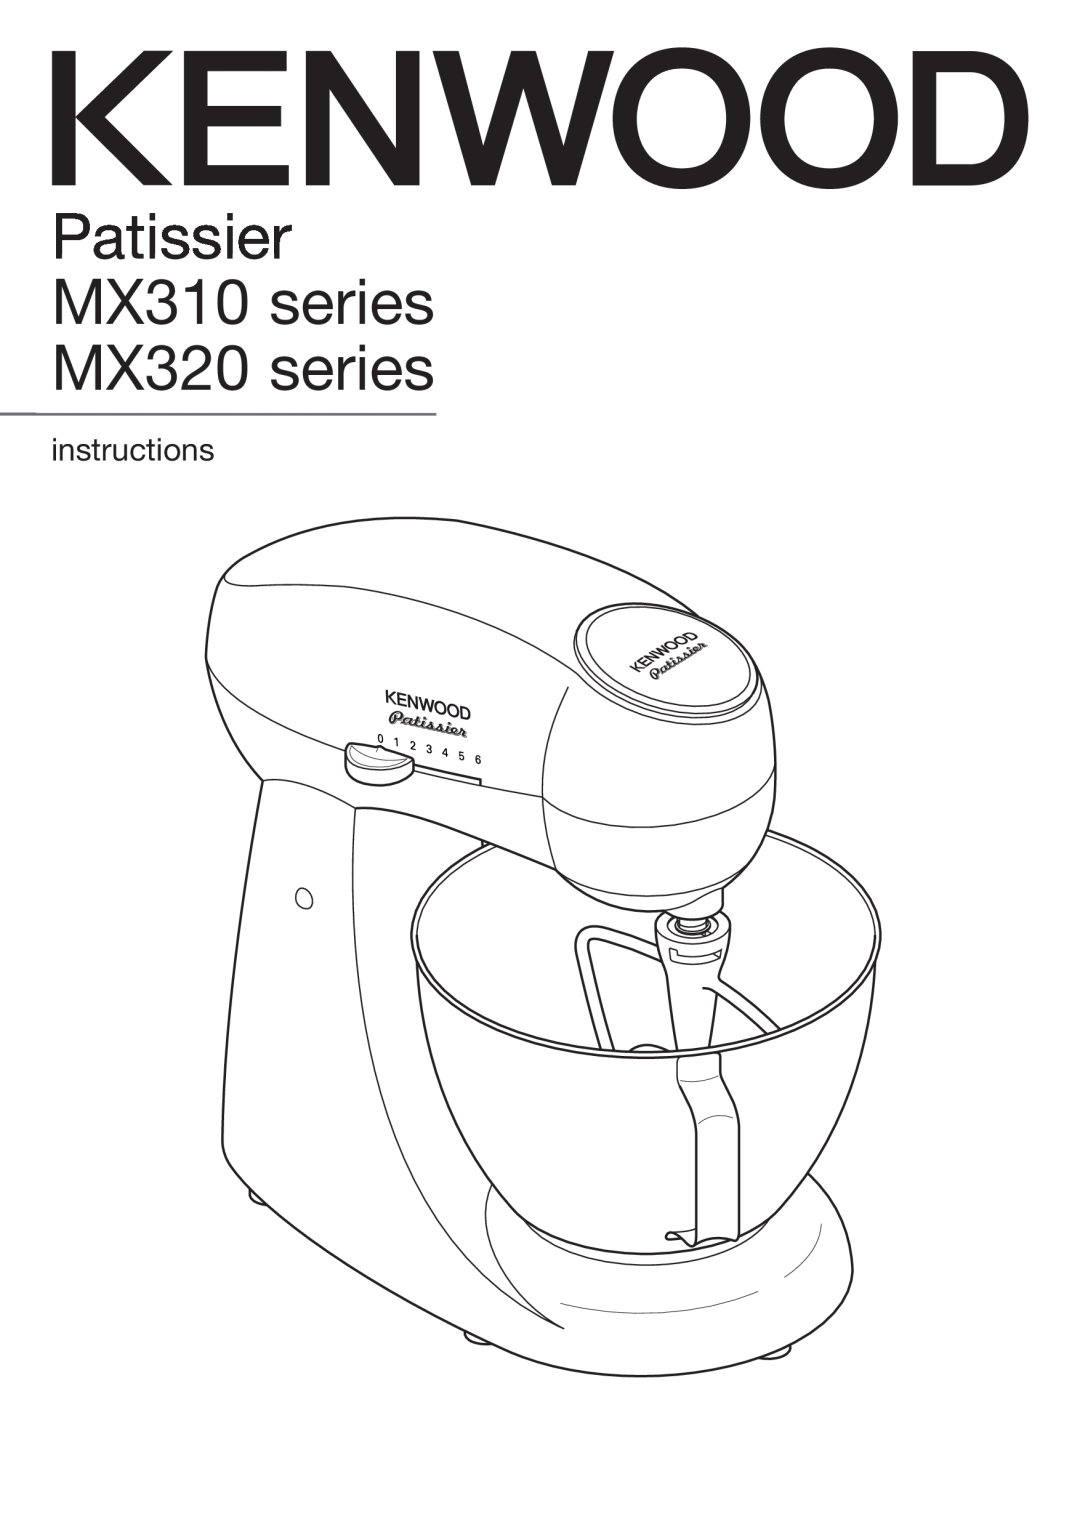 Kenwood manual instructions, Patissier MX310 series MX320 series 